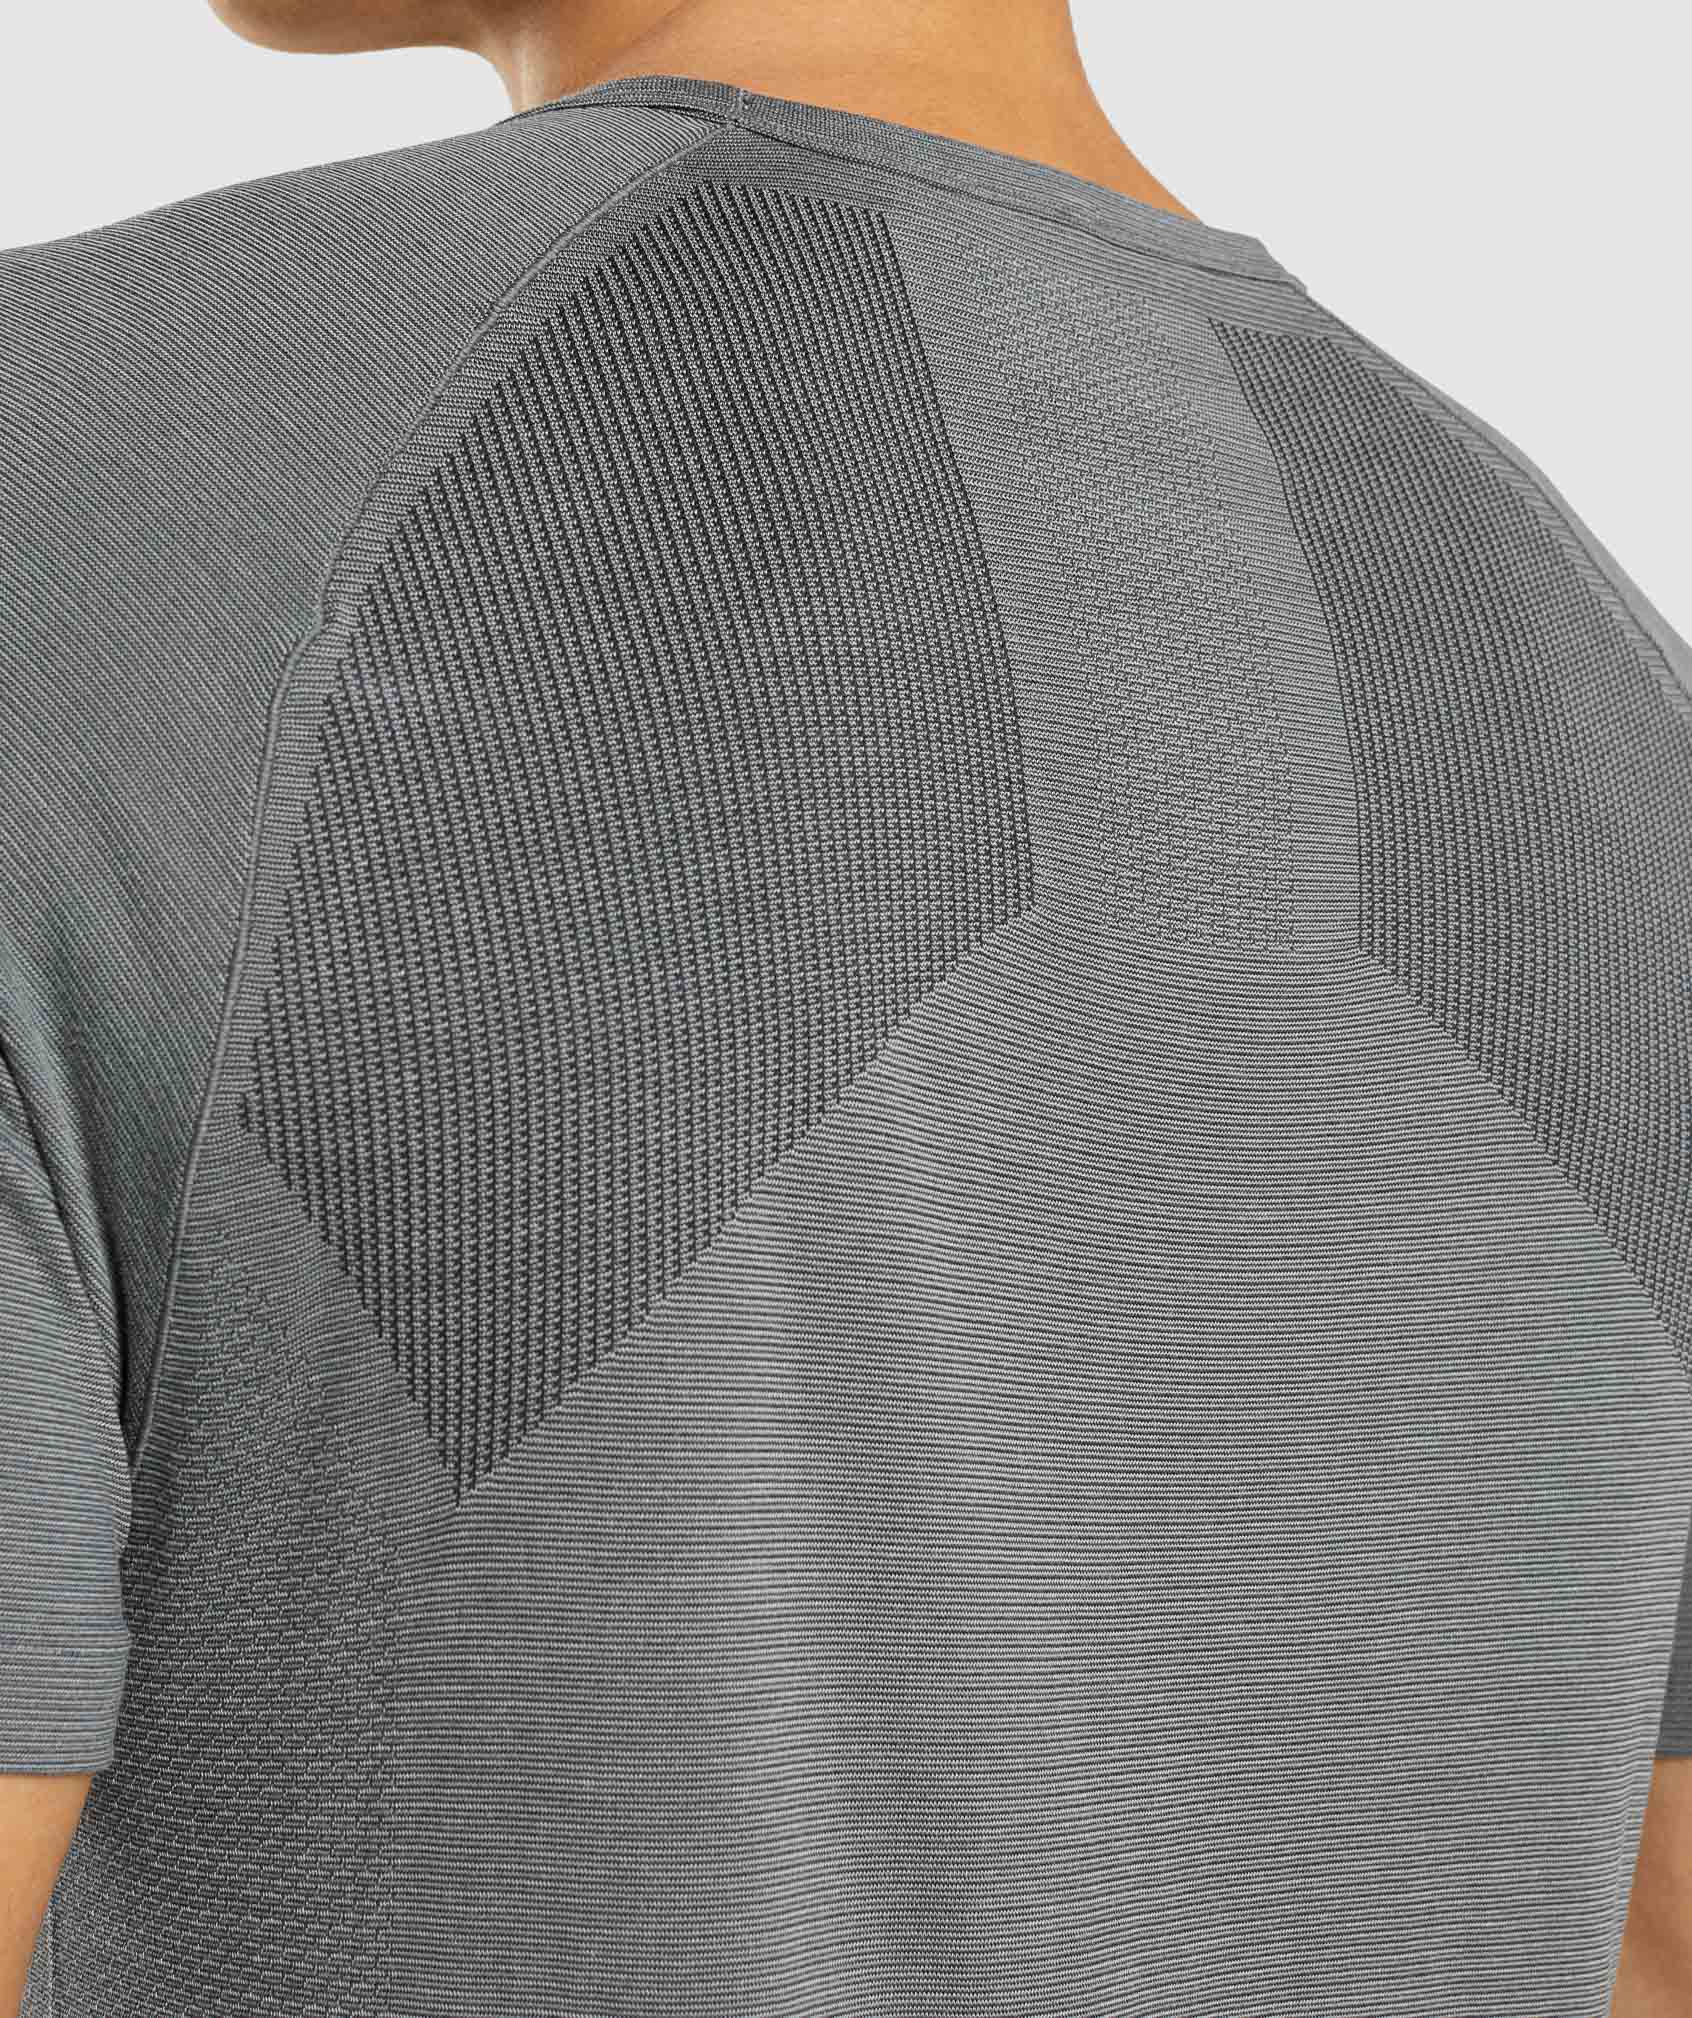 Retake Seamless T-Shirt in Black/Charcoal Marl - view 7